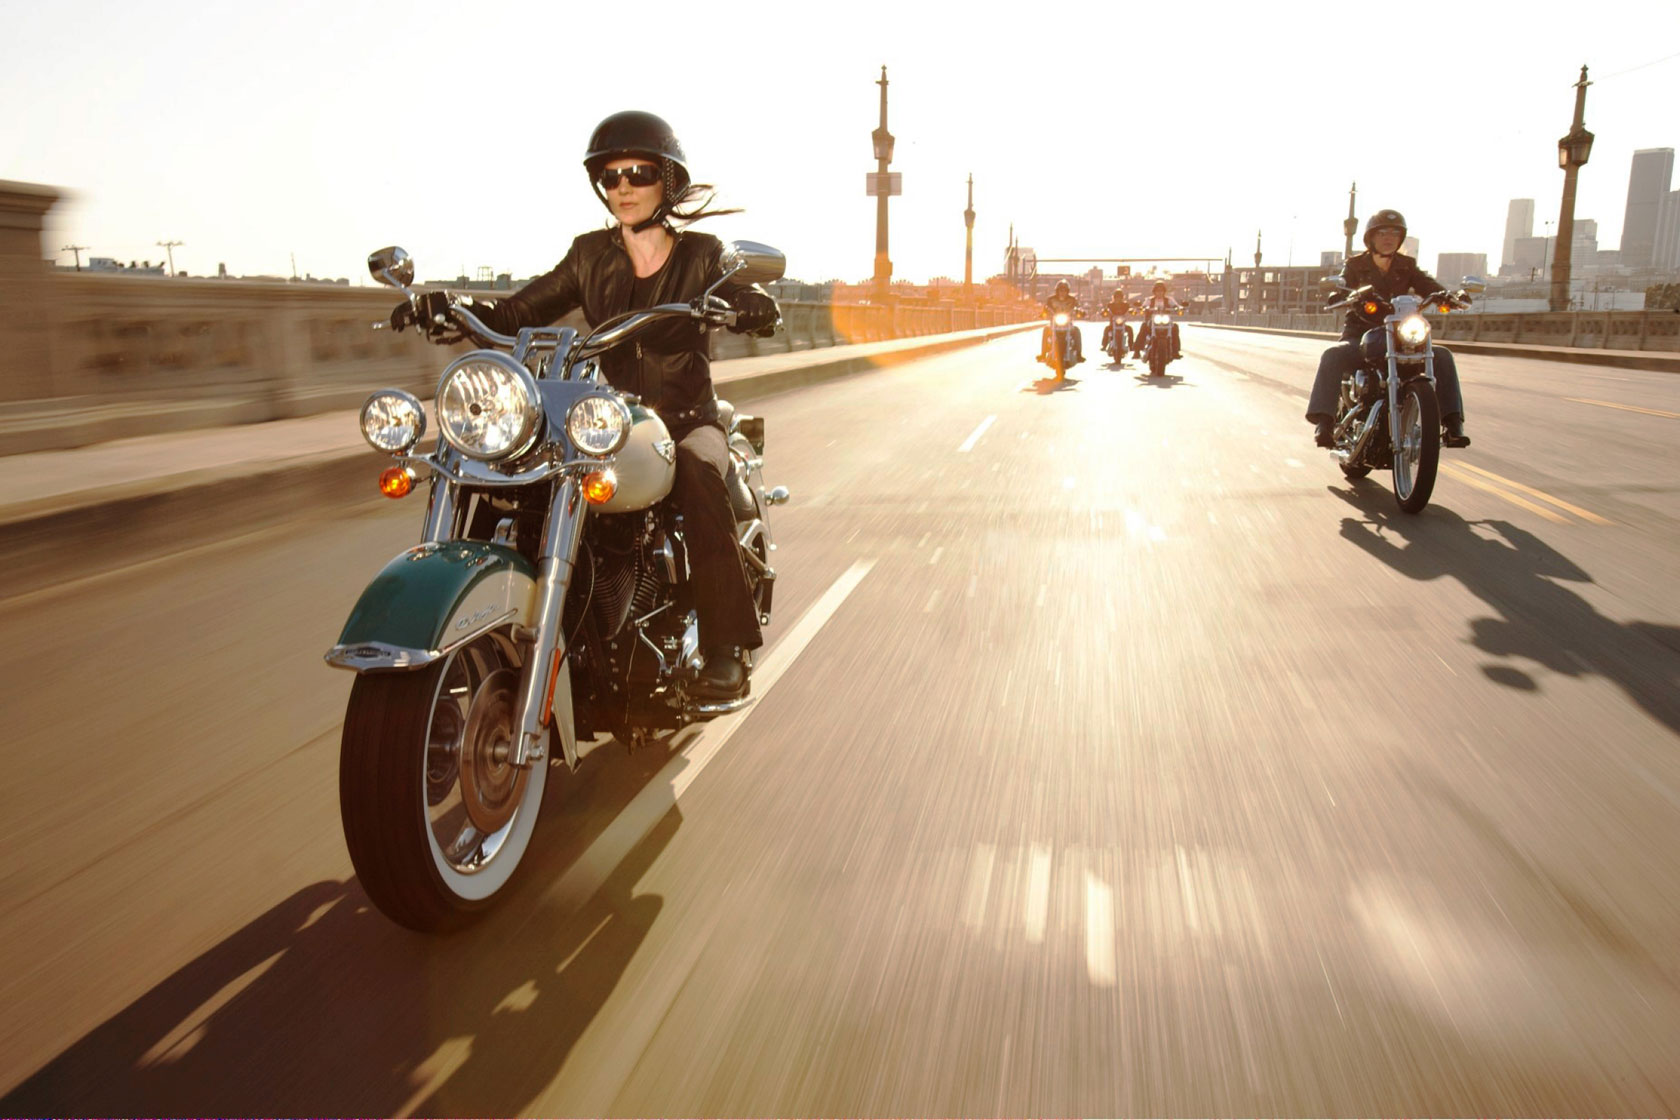 Harley Davidson on the road